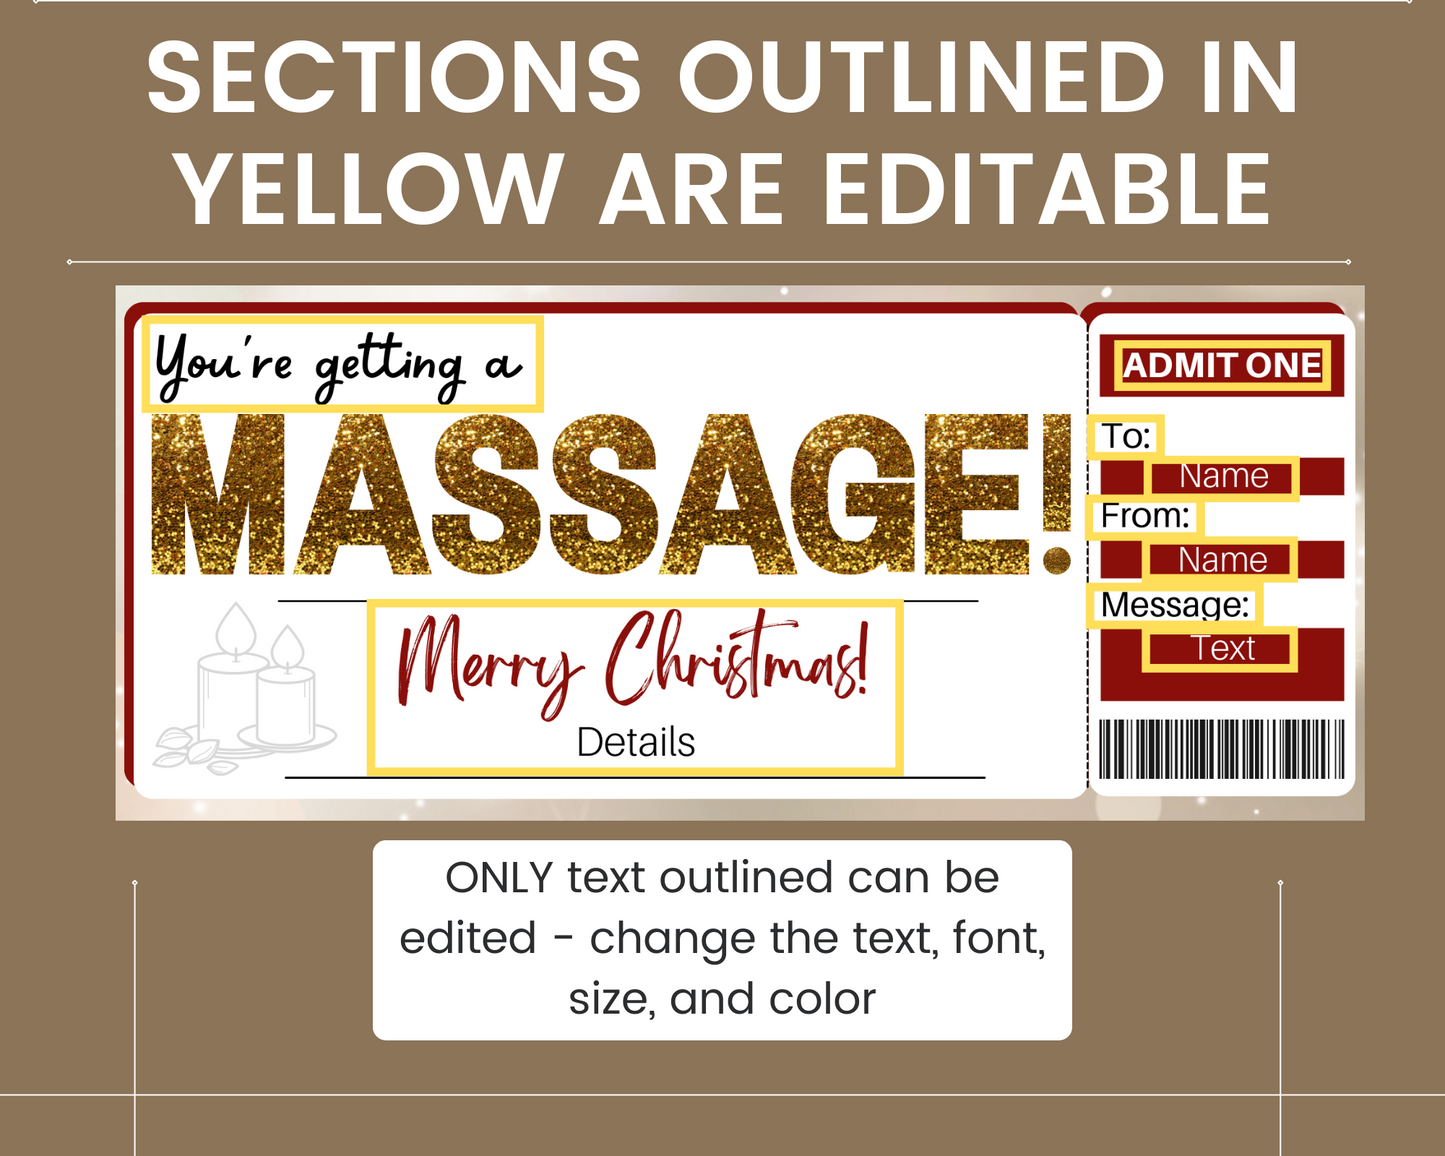 Christmas Massage Gift Certificate Template